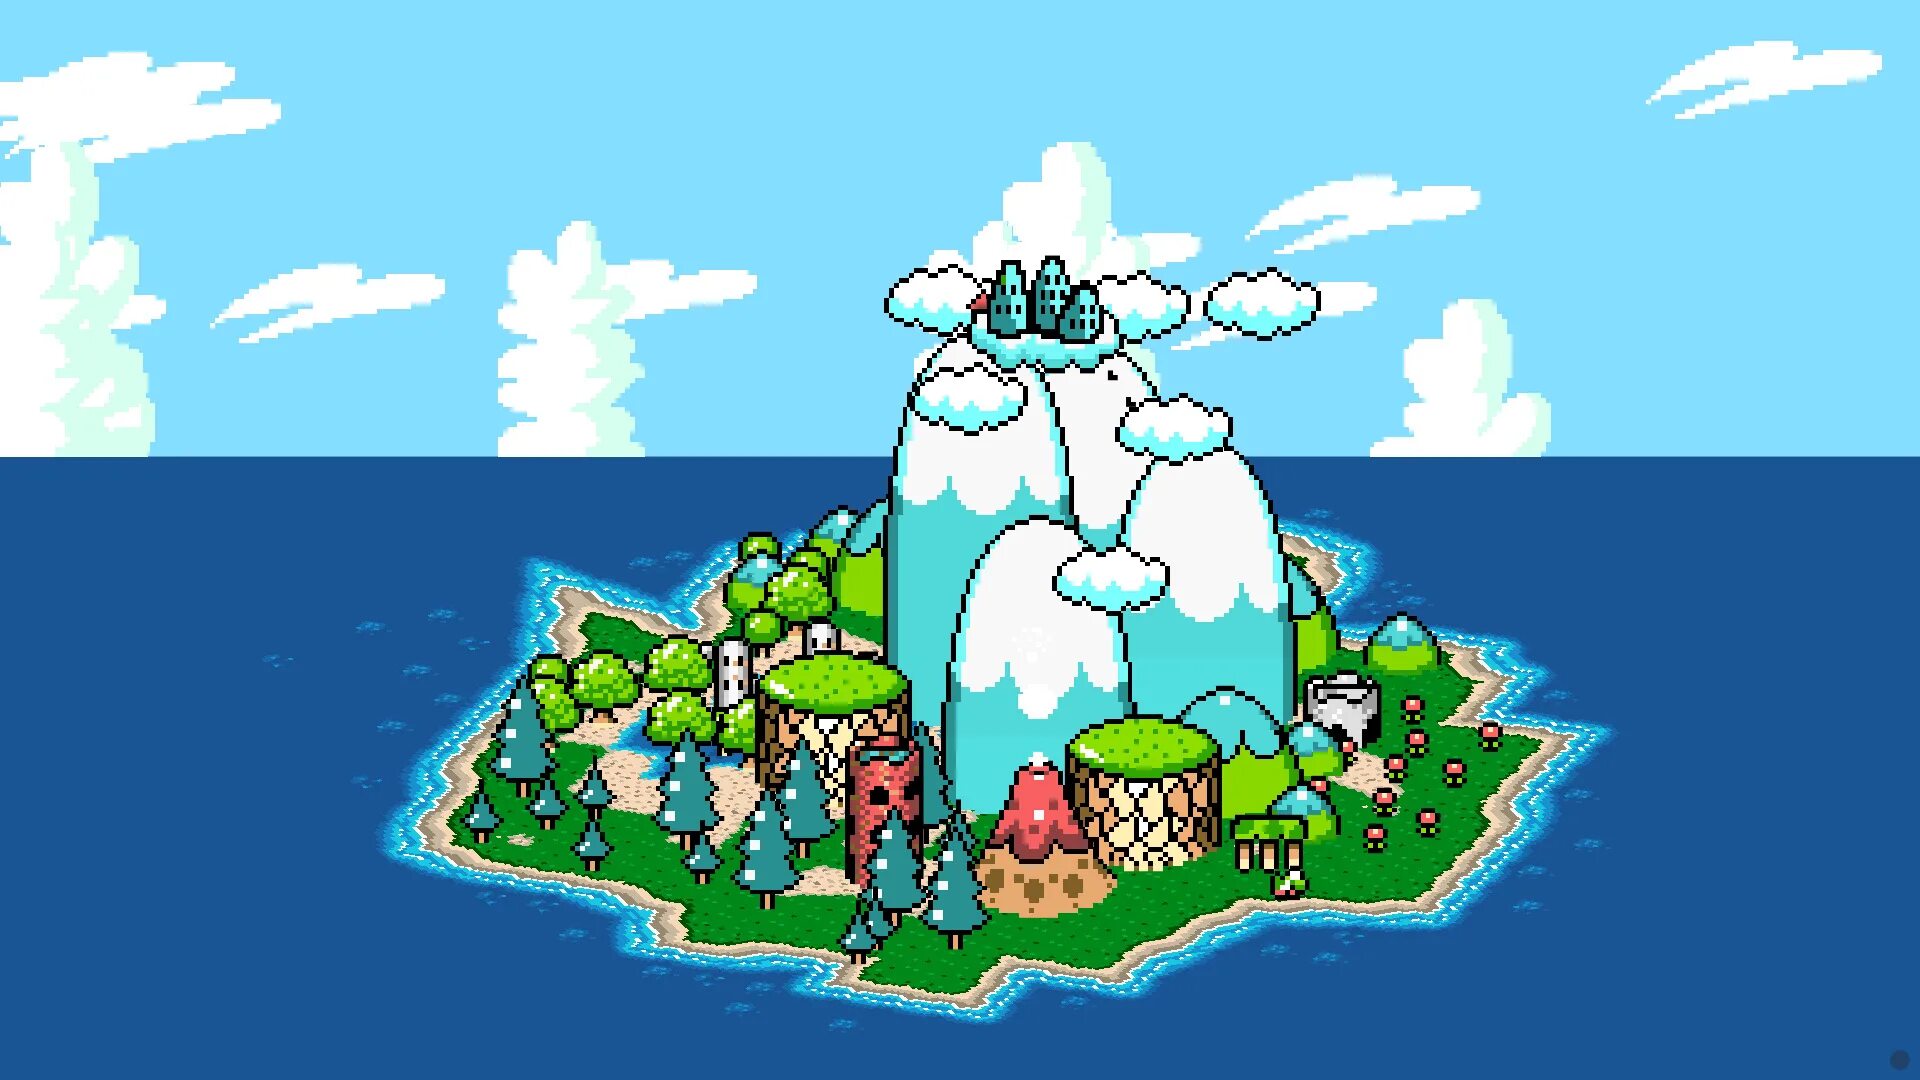 Hero's island. Марио остров Йоши. Super Mario World 2 Yoshis Island. Super Mario World 2 - Yoshi's Island Snes. Марио остров Йоши приведения.